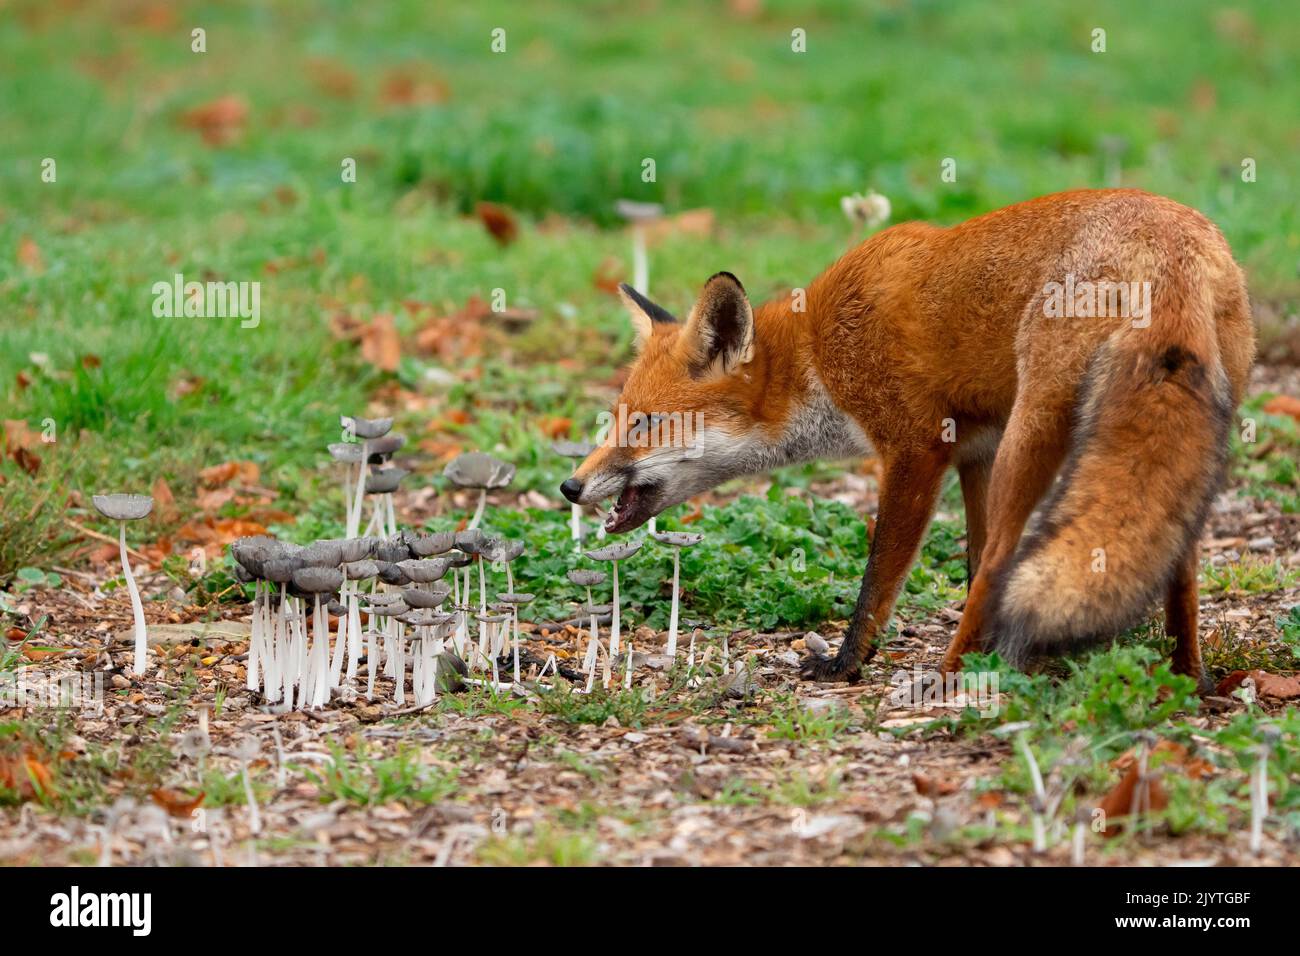 Red fox (Vulpes vulpes) eating mushrooms, England Stock Photo